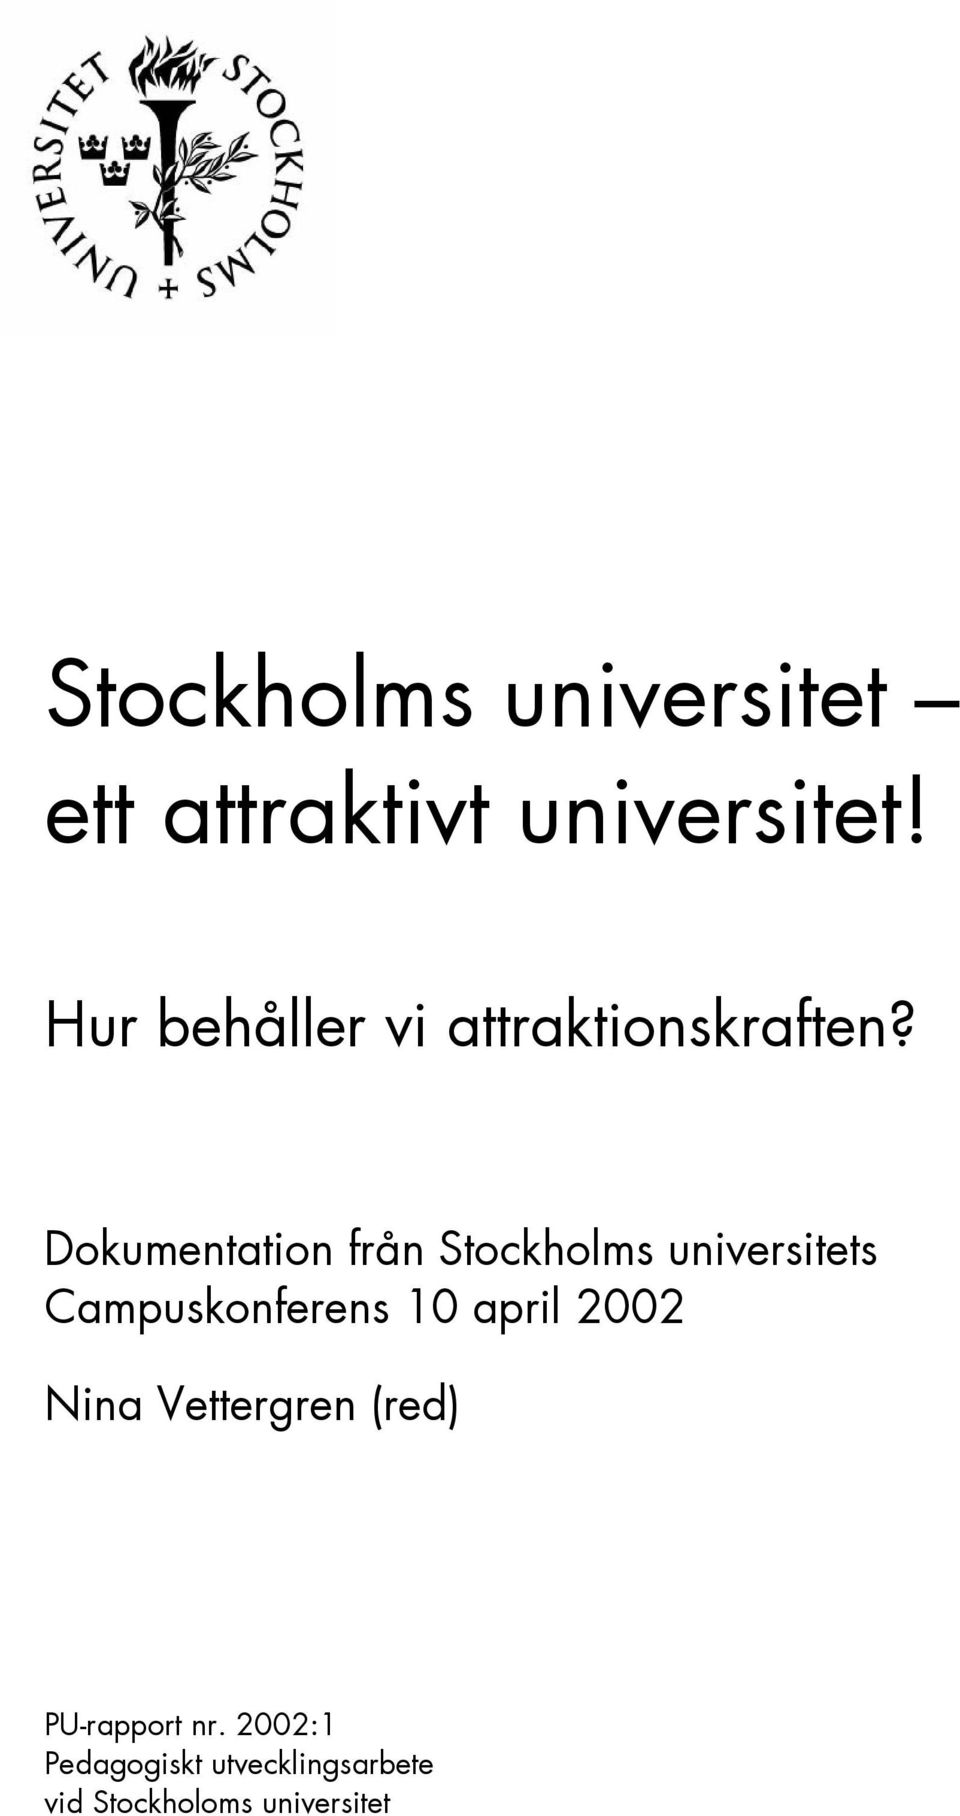 Dokumentation från Stockholms universitets Campuskonferens 10